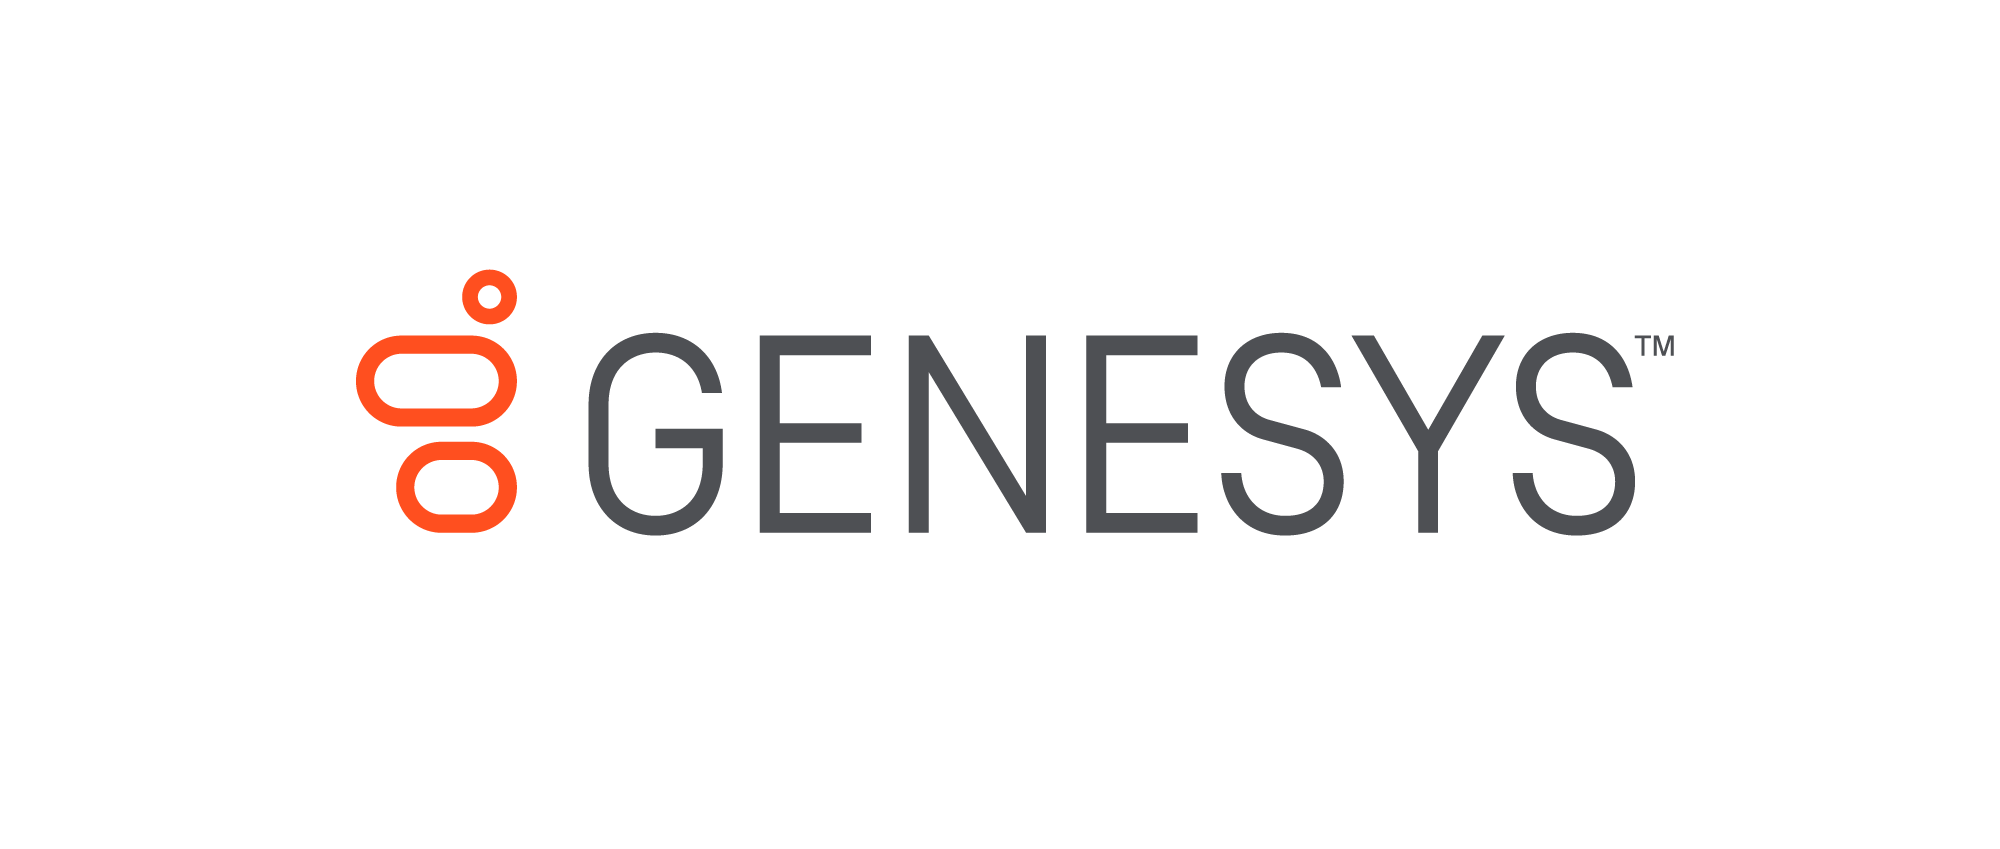 Genesys's logo